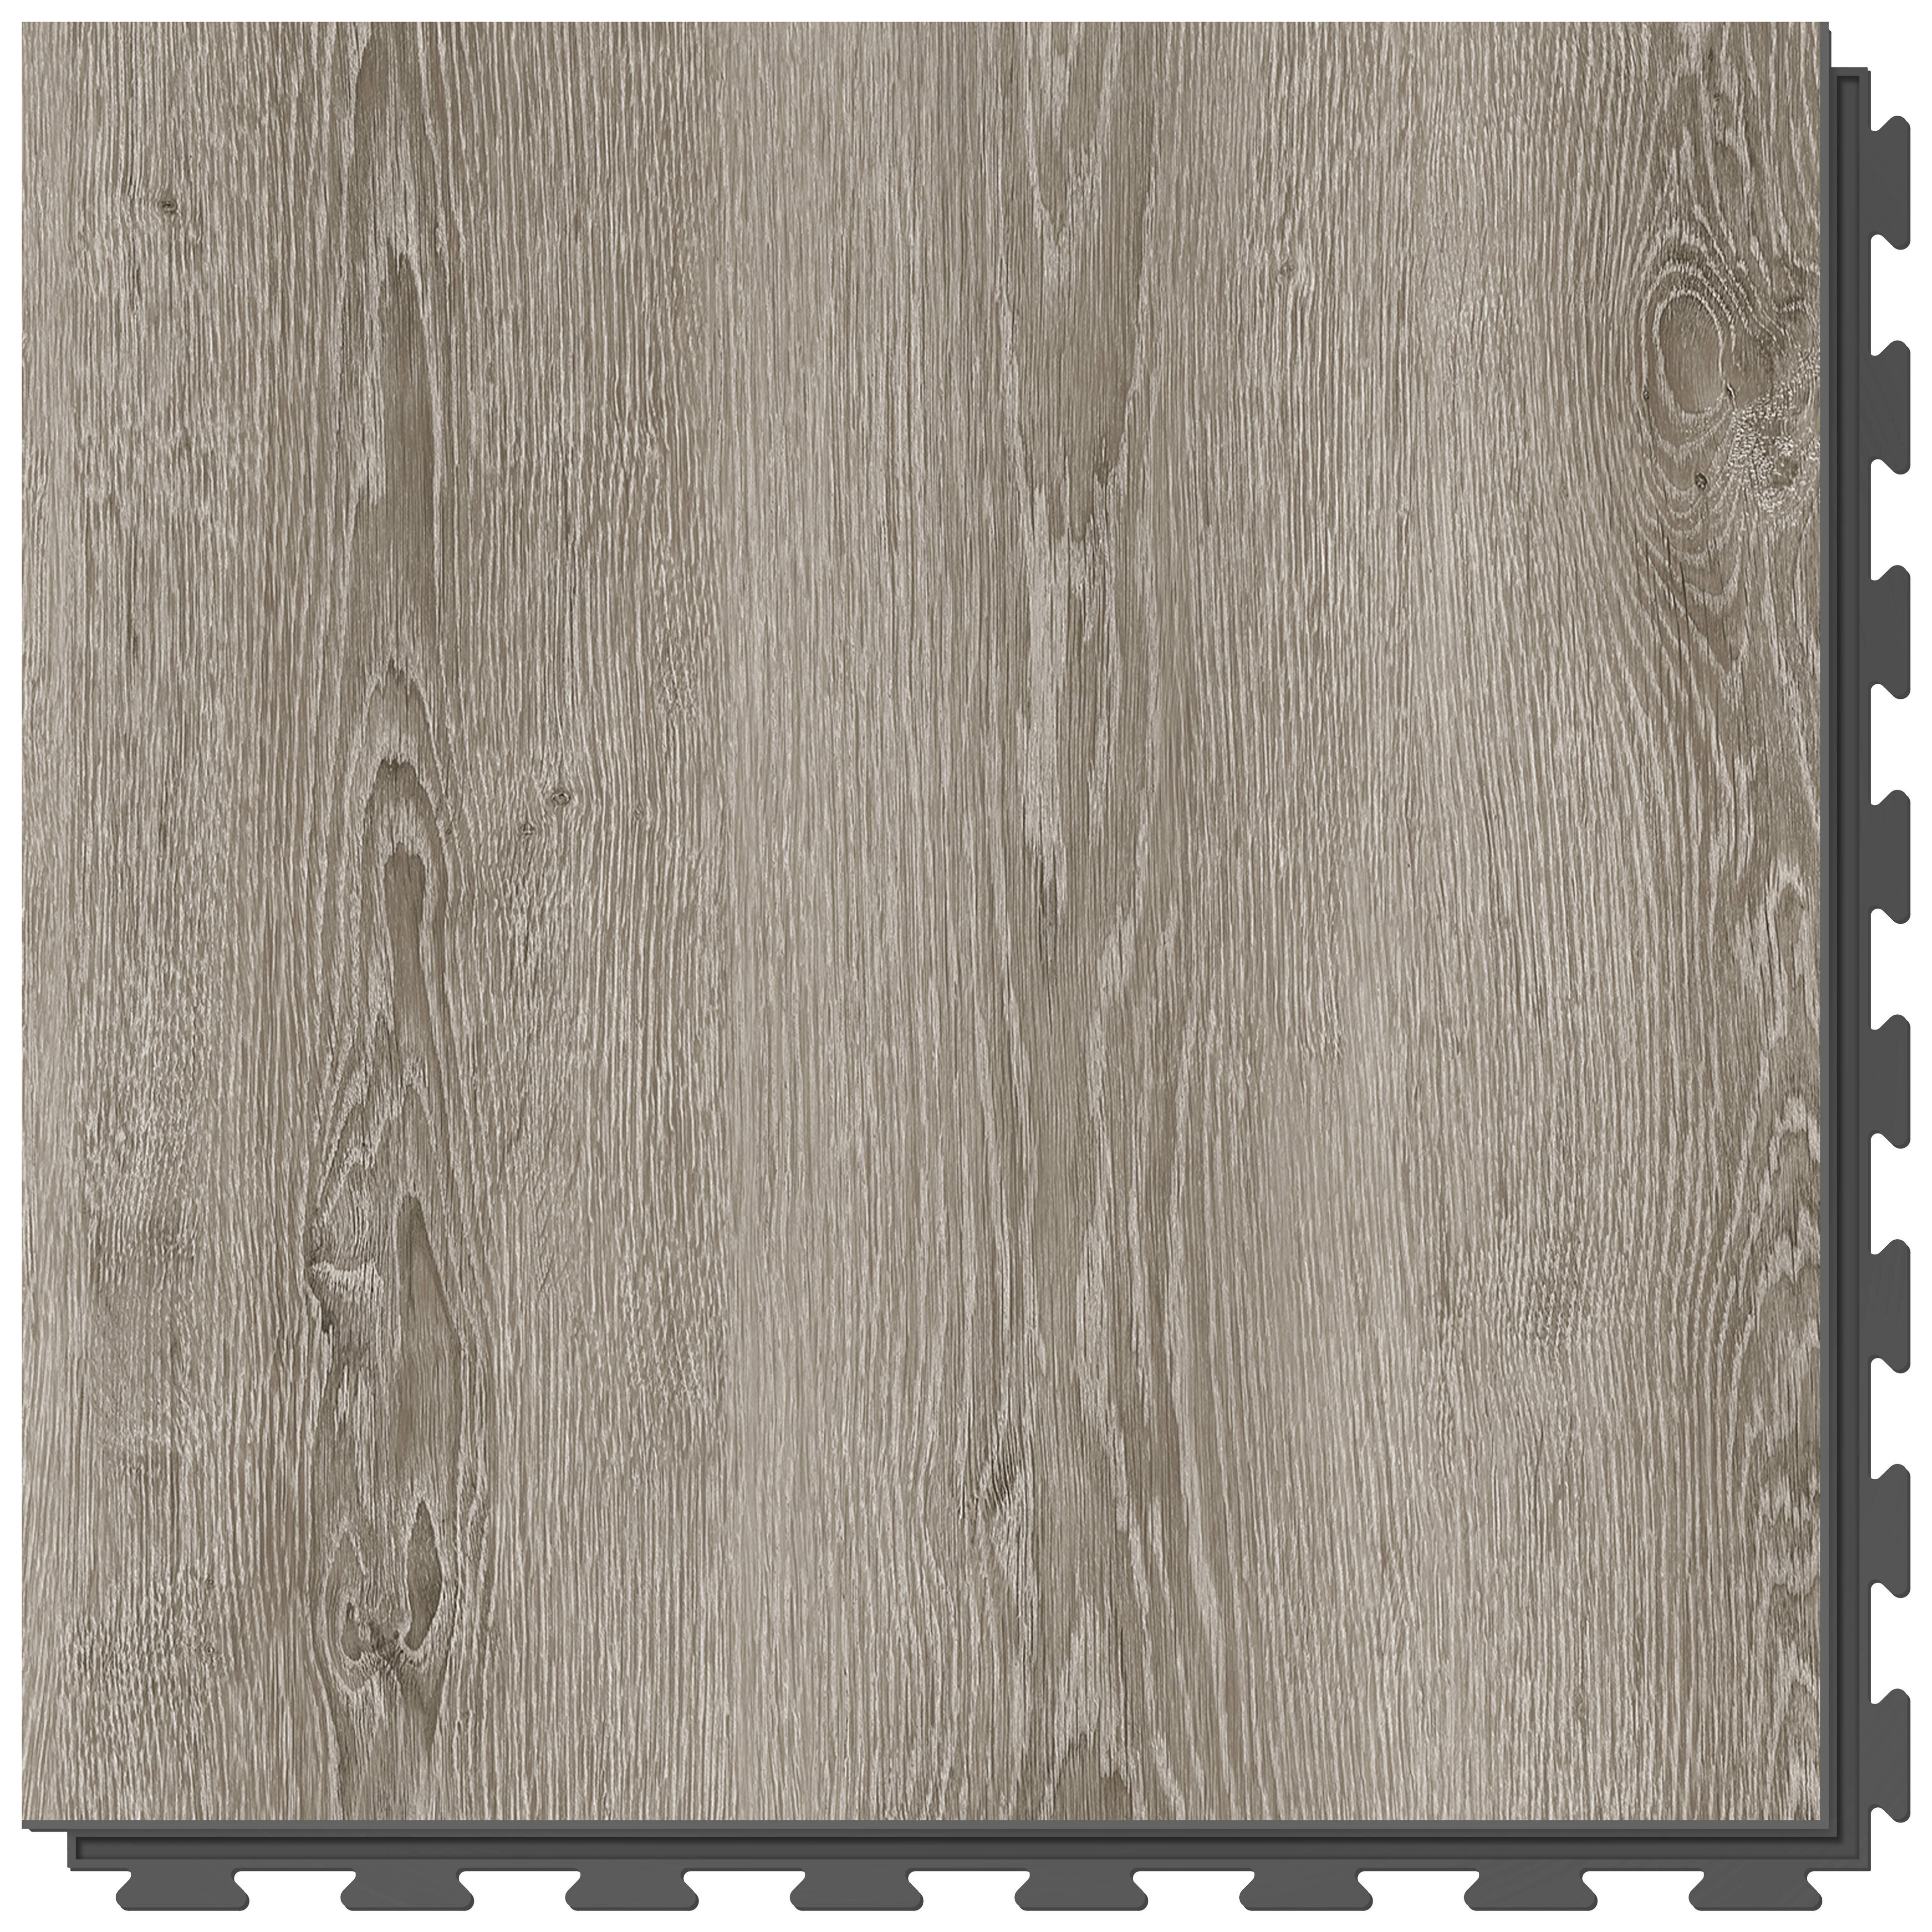 Sivá PVC vinylová dlažba Fortelock Business Scandinavian Oak W002 Graphite - dĺžka 66,8 cm, šírka 66,8 cm, výška 0,7 cm